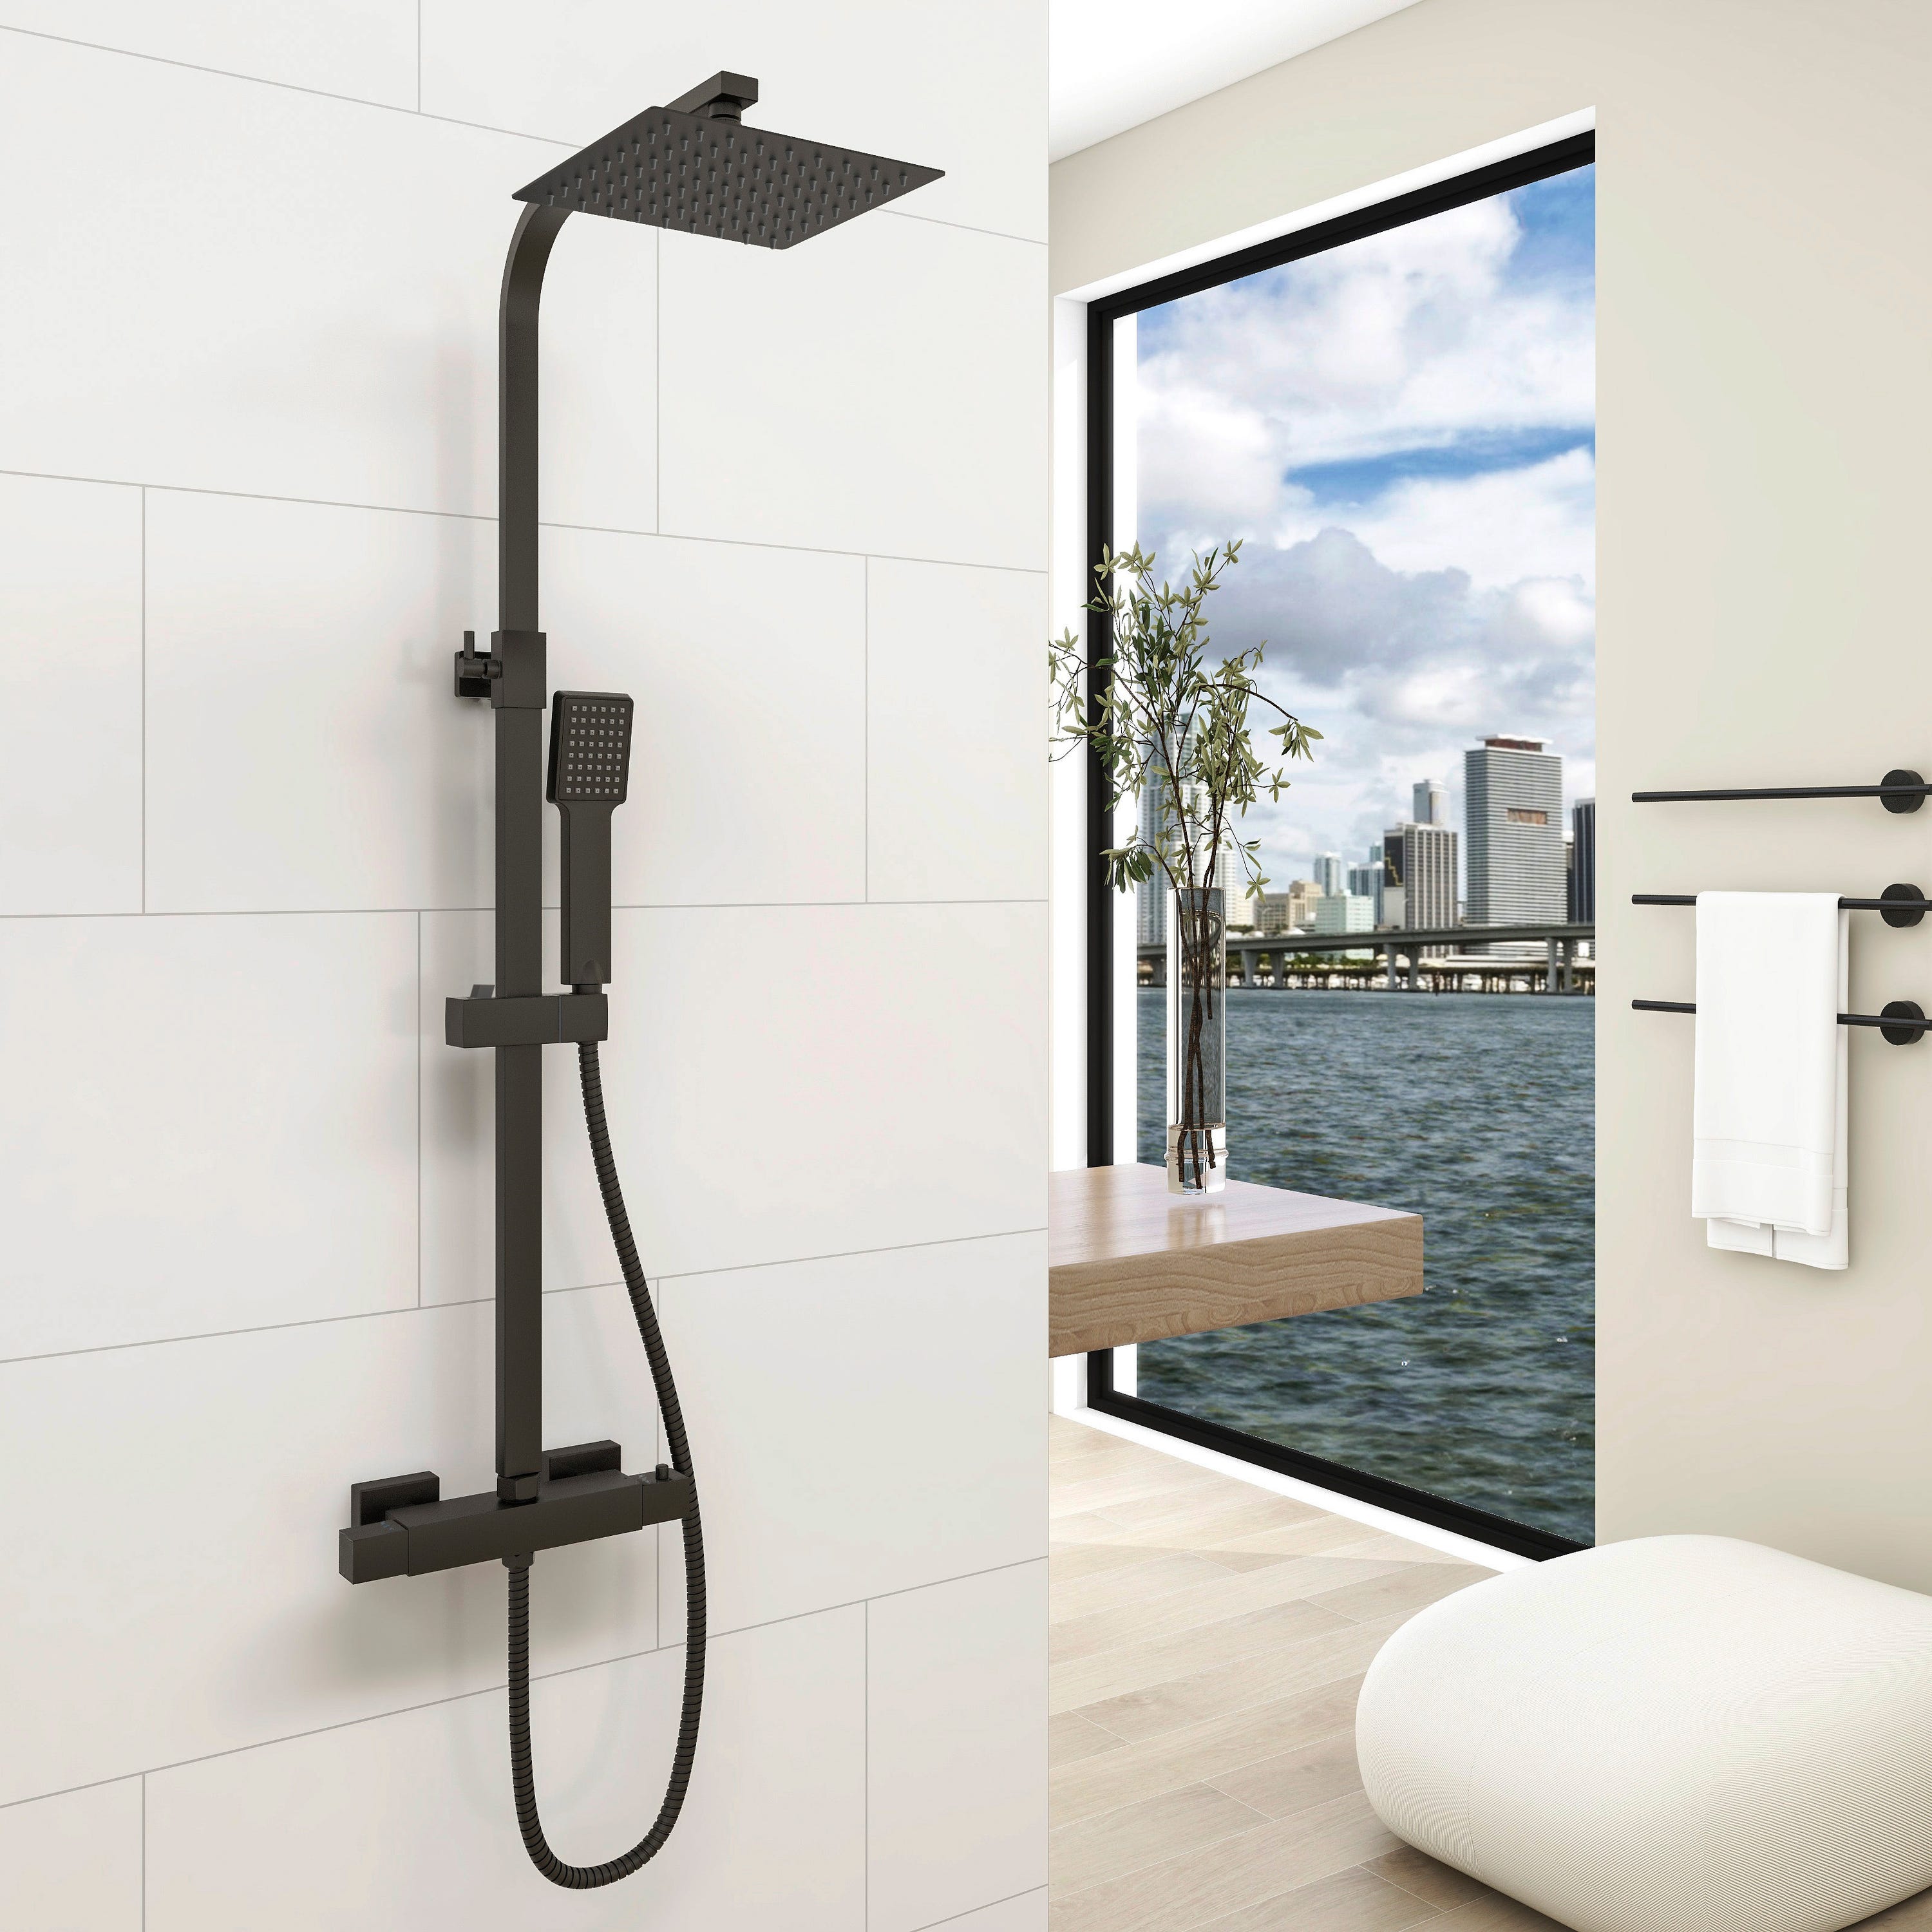 Comprar Columna de ducha/bañera negro mate termostática redonda online